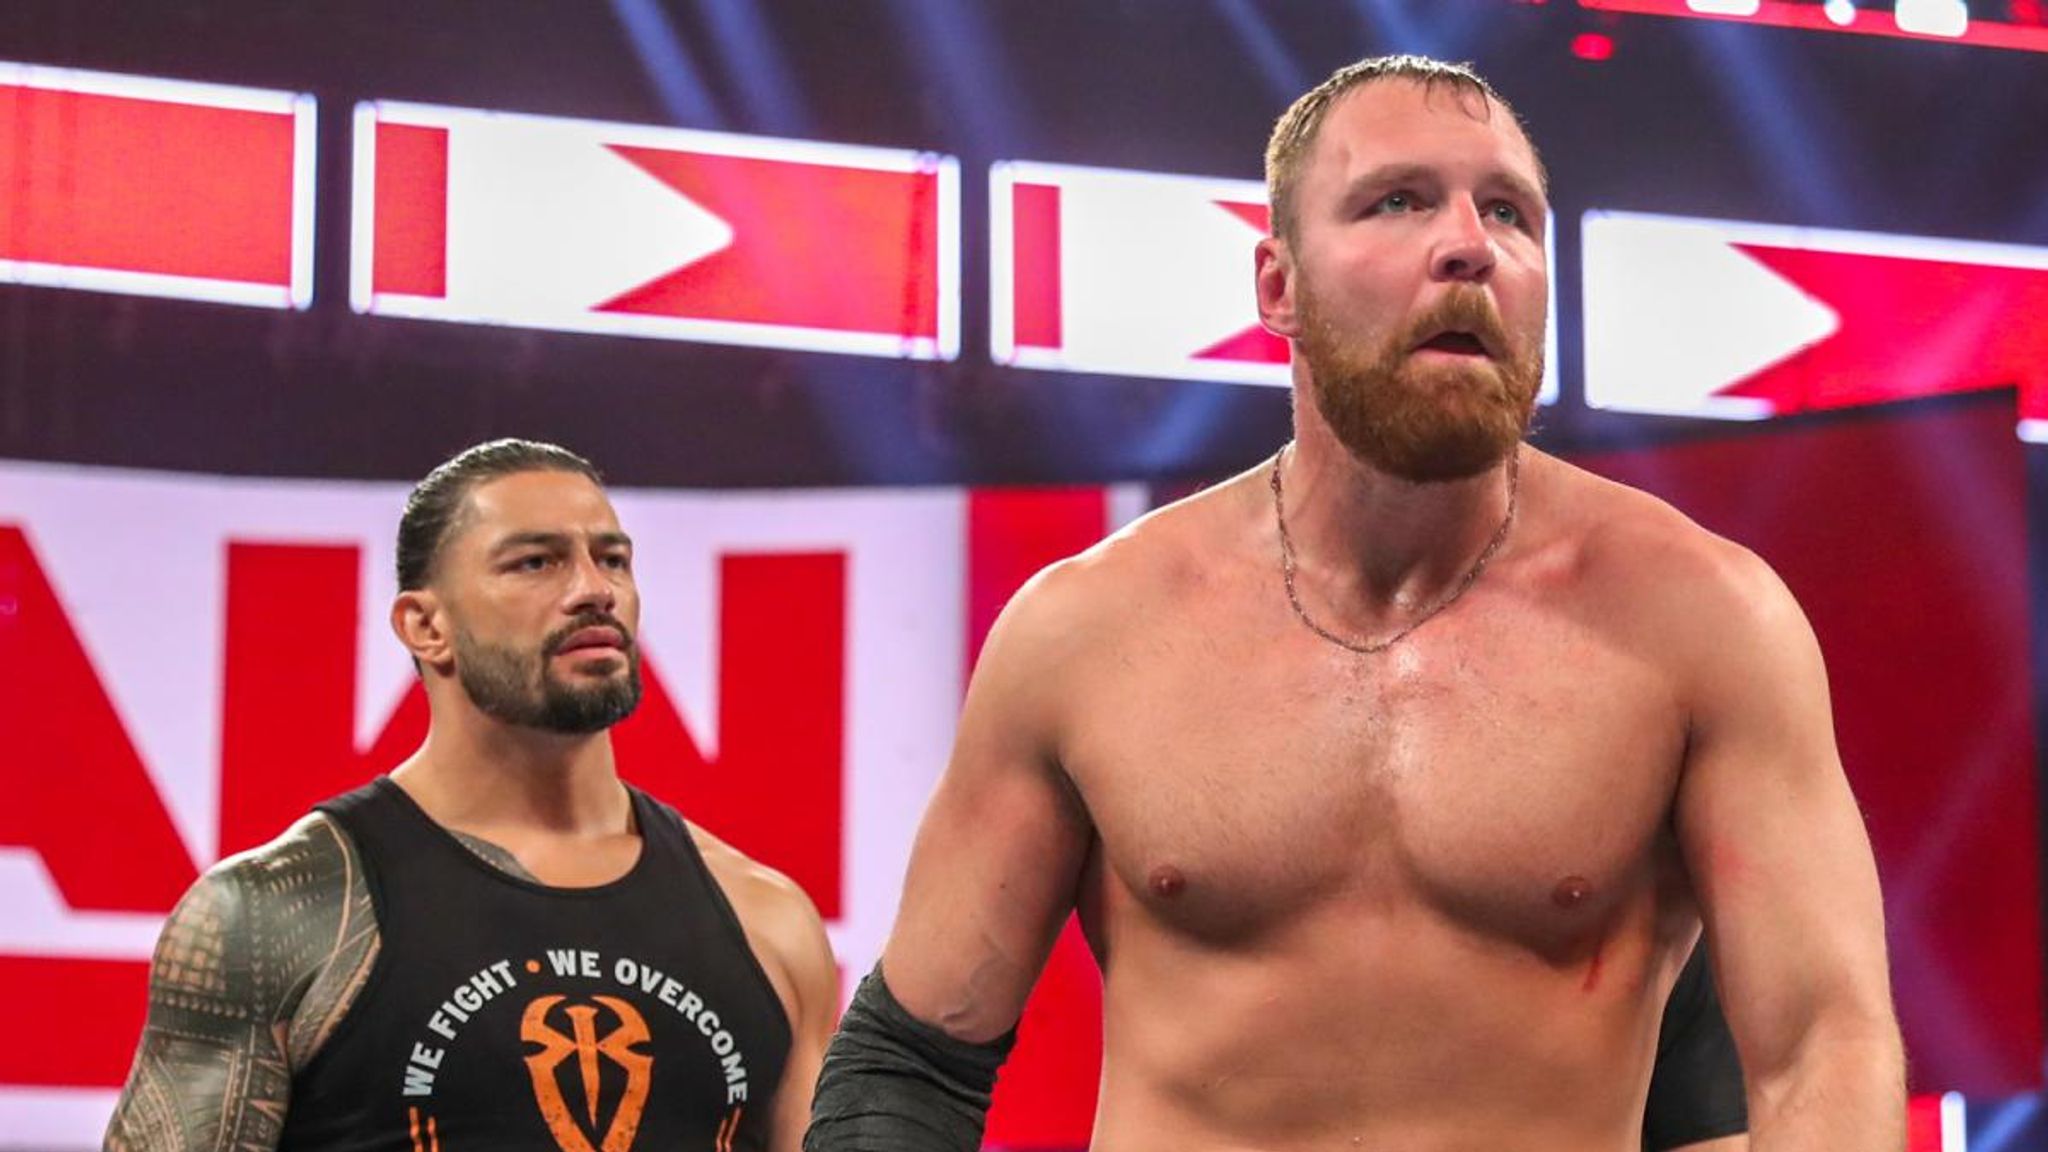 Roman Reigns: Dean Ambrose's WWE exit was a shock